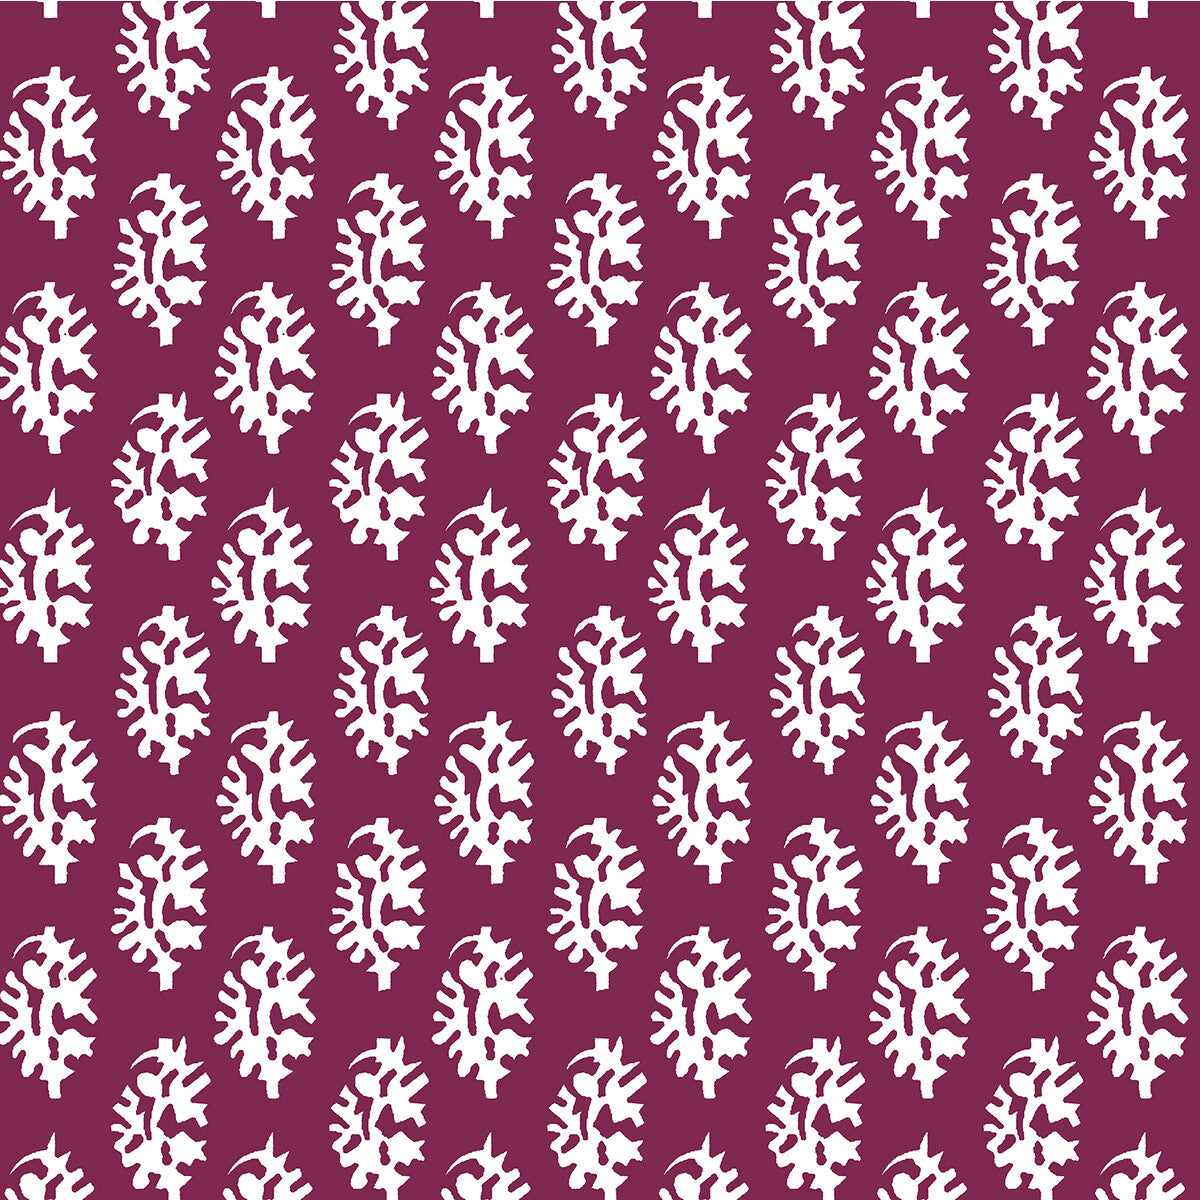 Seijo fabric in burdeos color - pattern LCT1027.003.0 - by Gaston y Daniela in the Lorenzo Castillo V collection